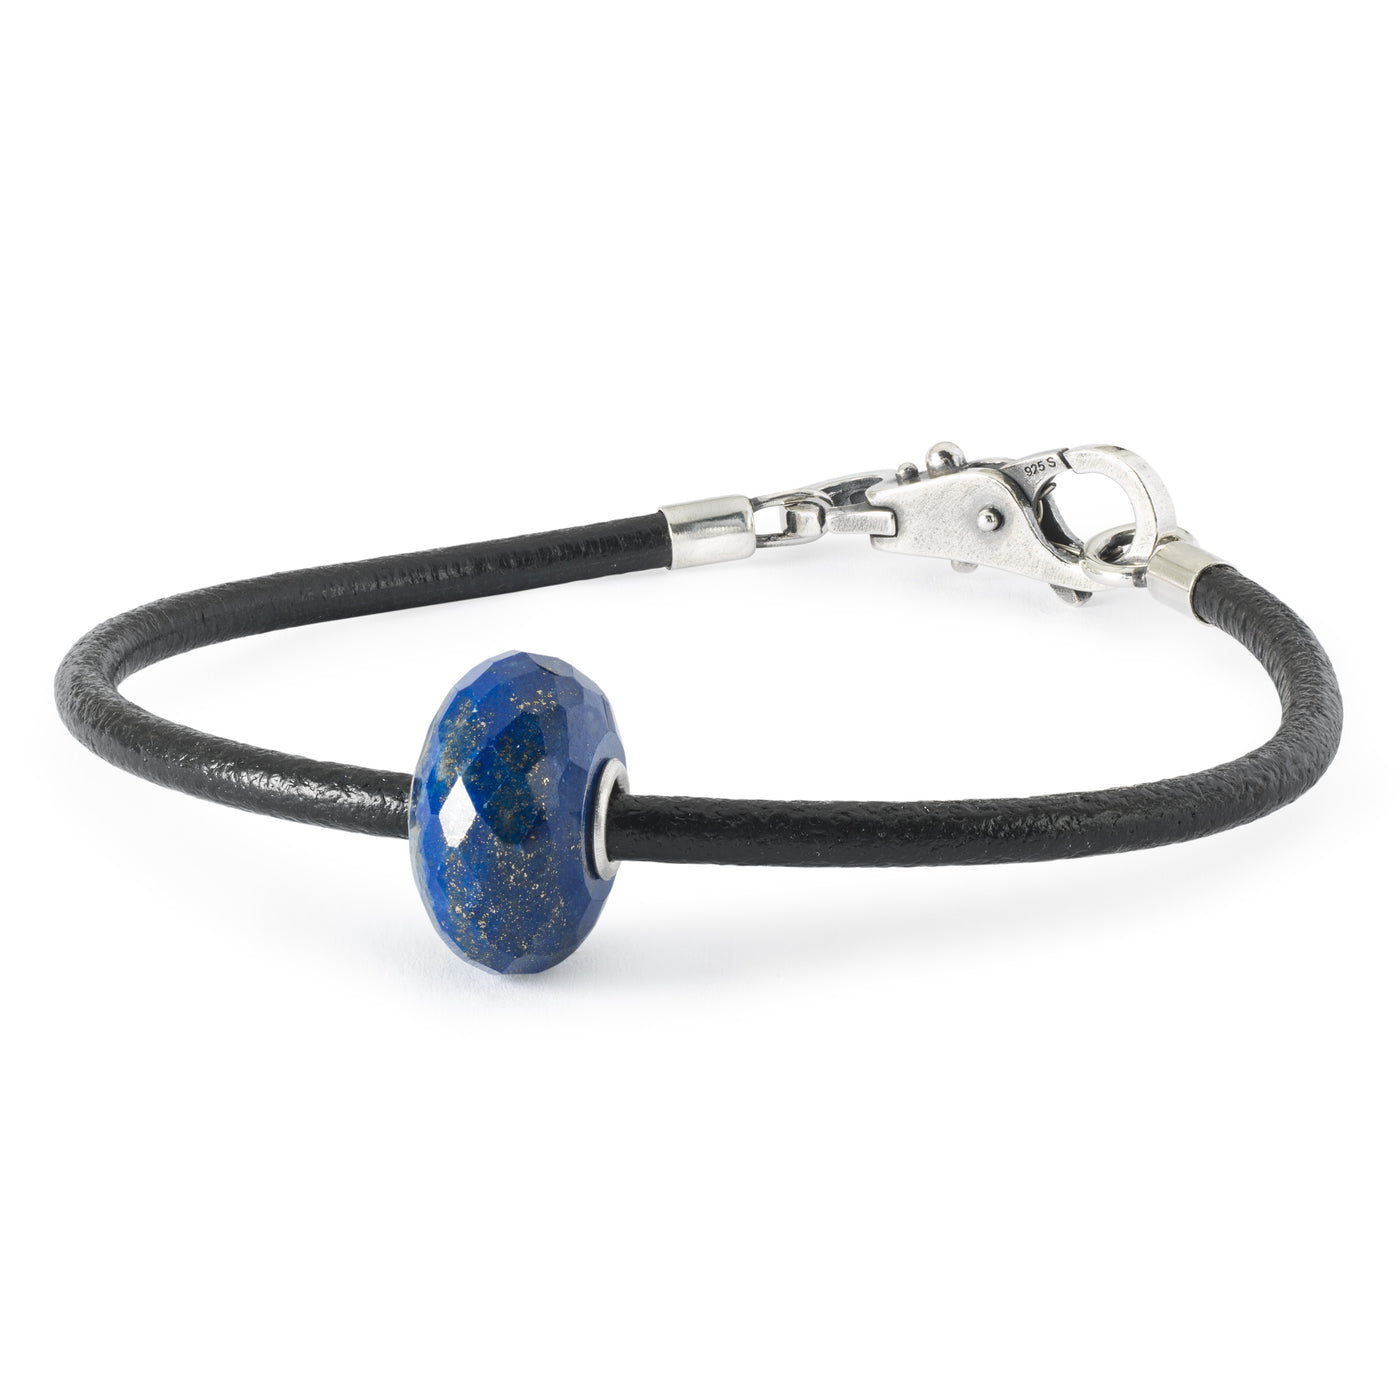 Lapis Lazuli Leather Bracelet